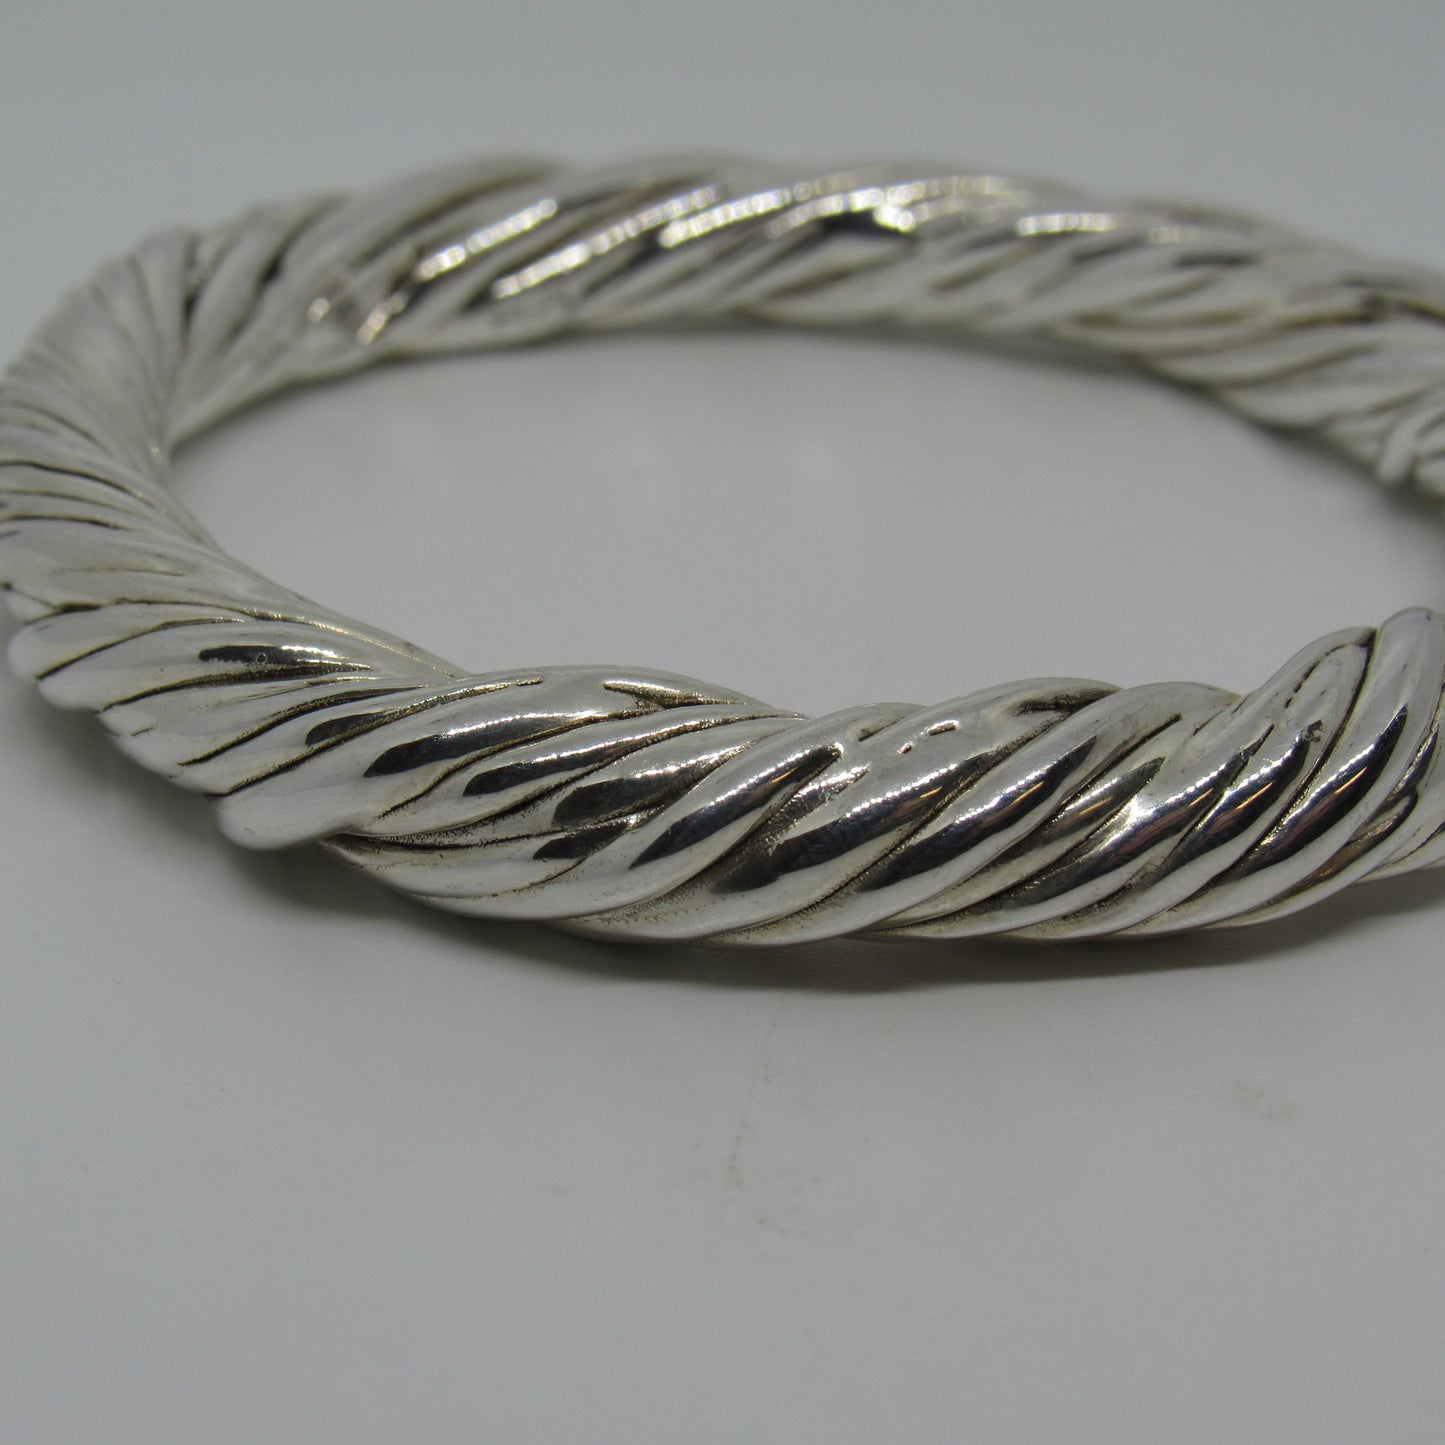 Bat Ami Israel Twisted Sterling Silver Electroform Bangle Bracelet - ~7 inch